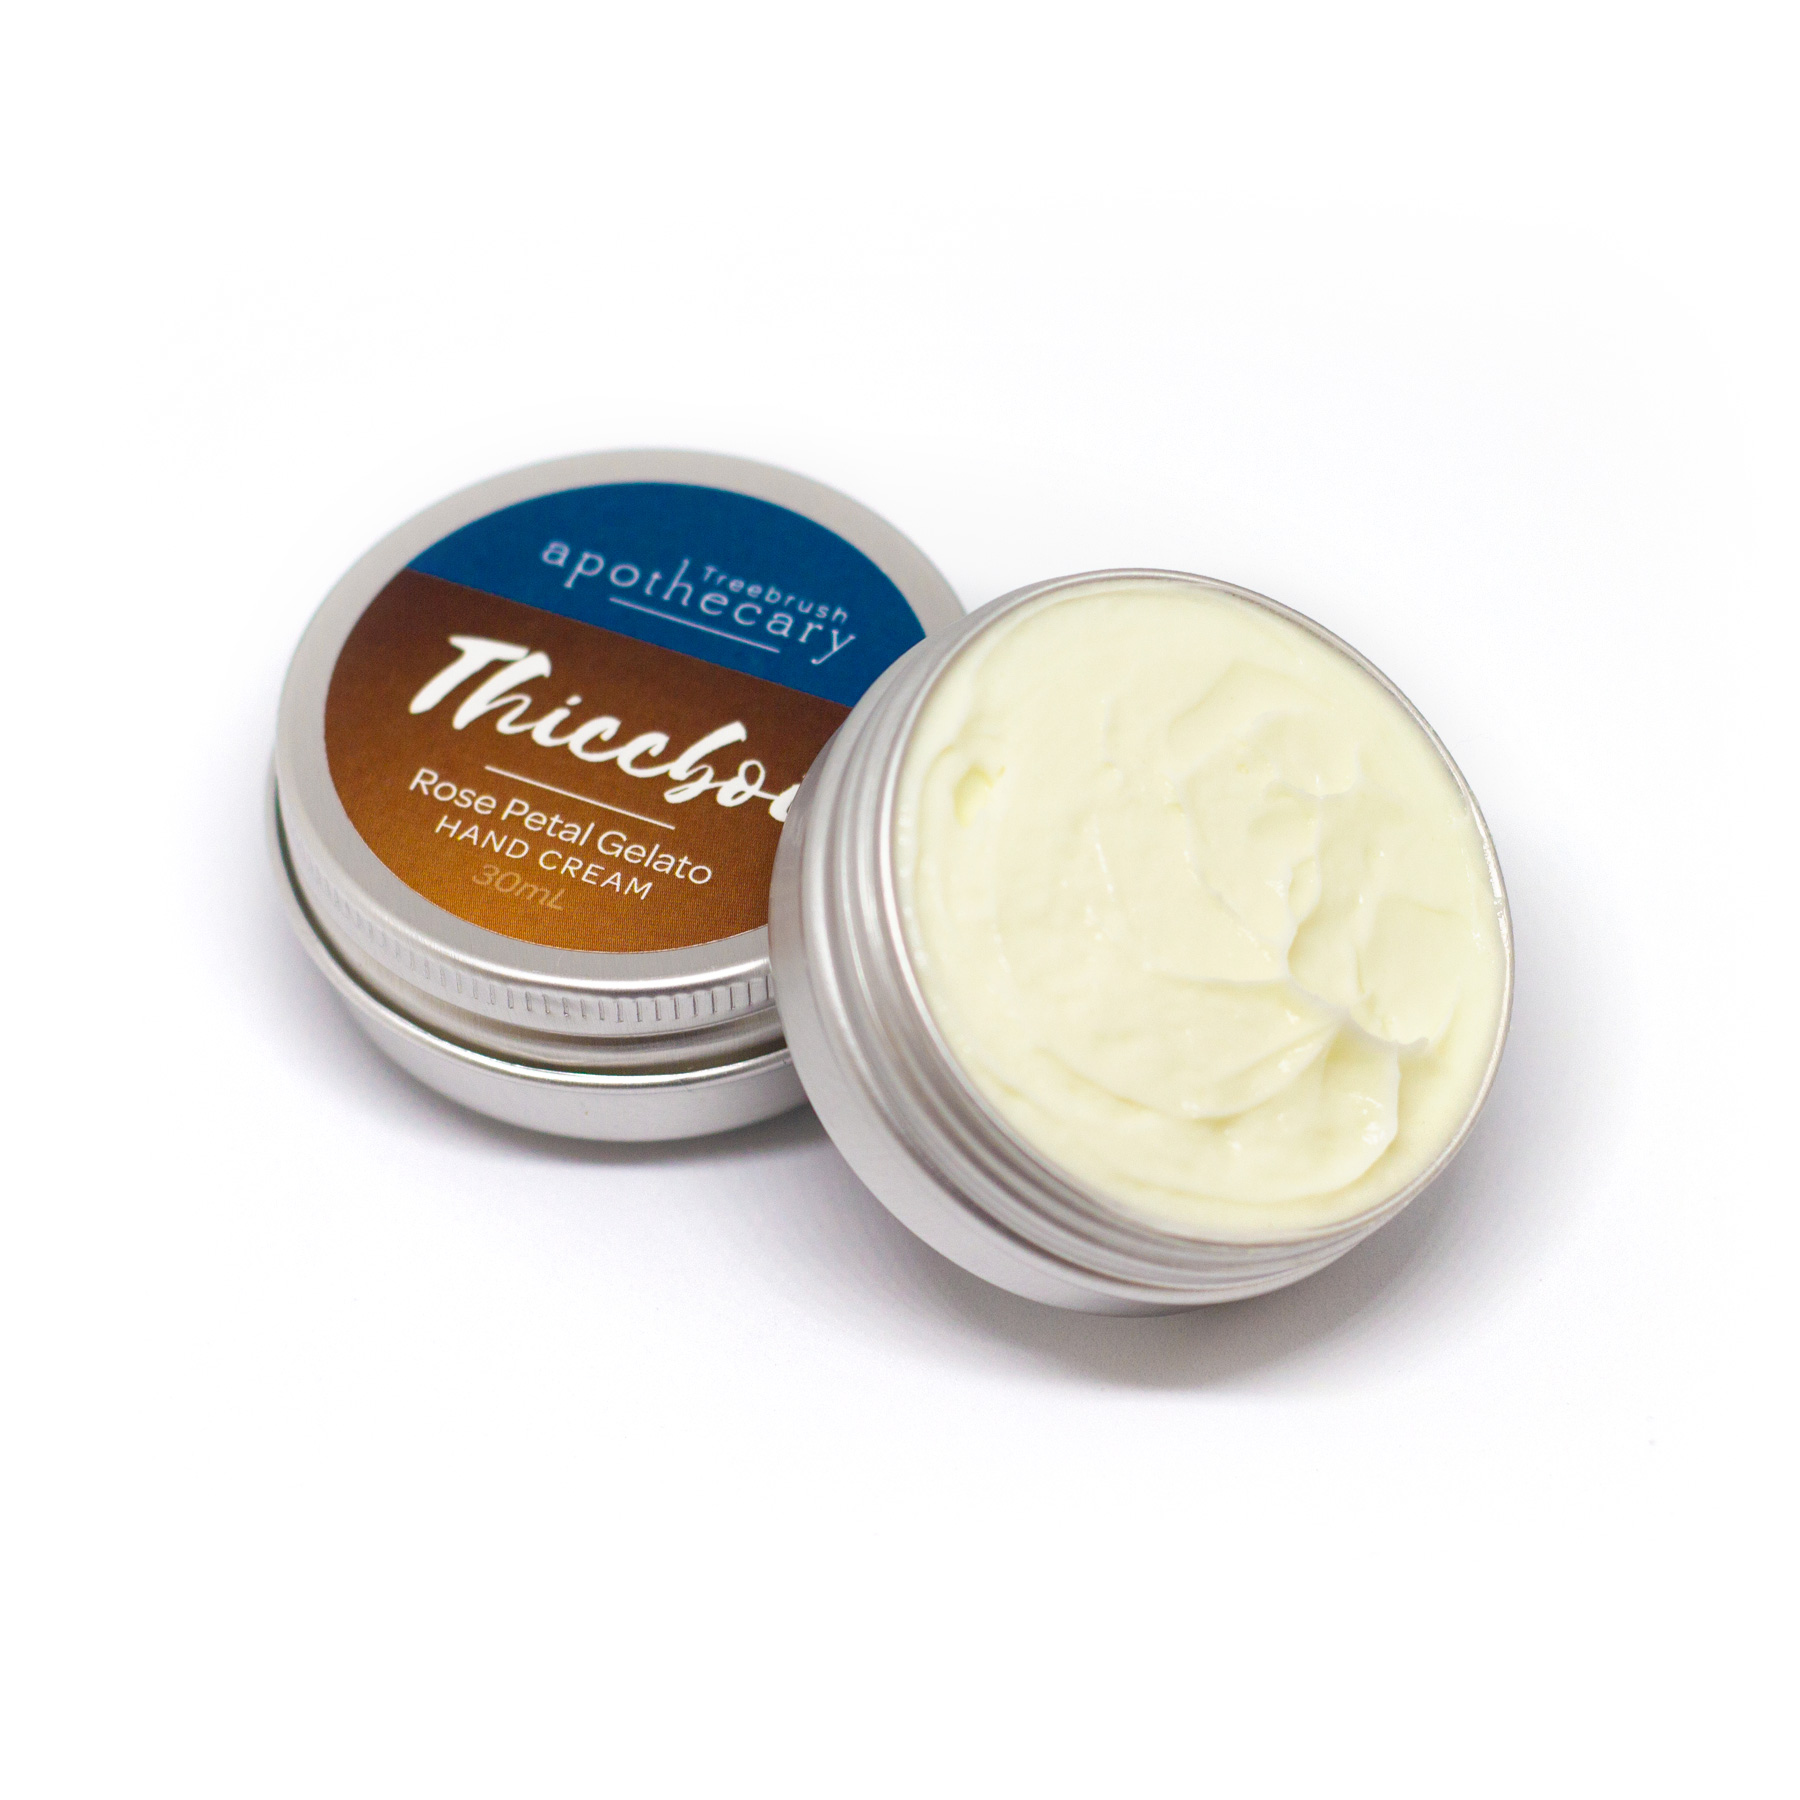 Thiccboi Heavy Duty Hand Cream